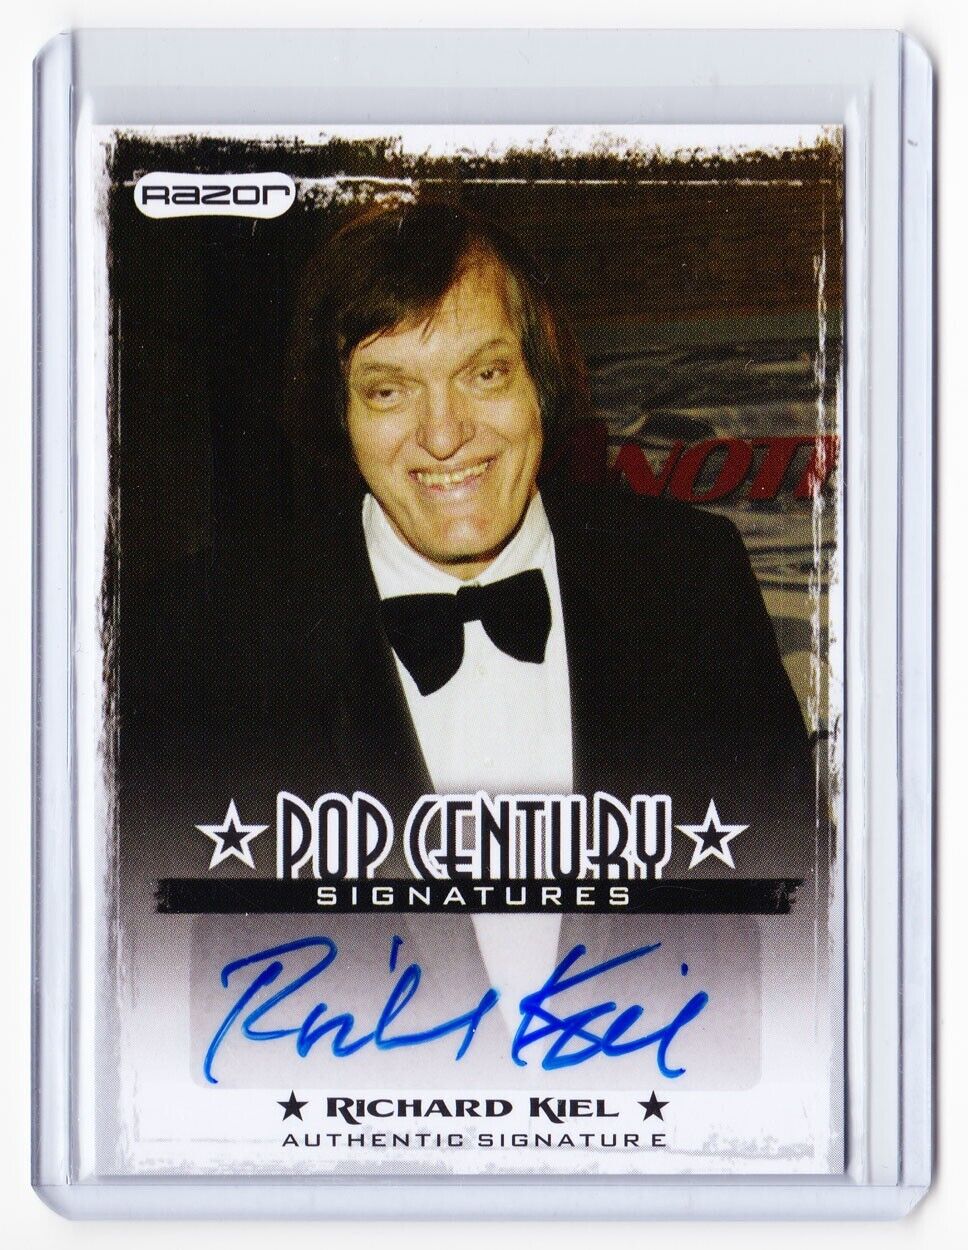 Richard Kiel 2010 Razor Pop Century Autograph Card - Jaws Auto 007 James Bond